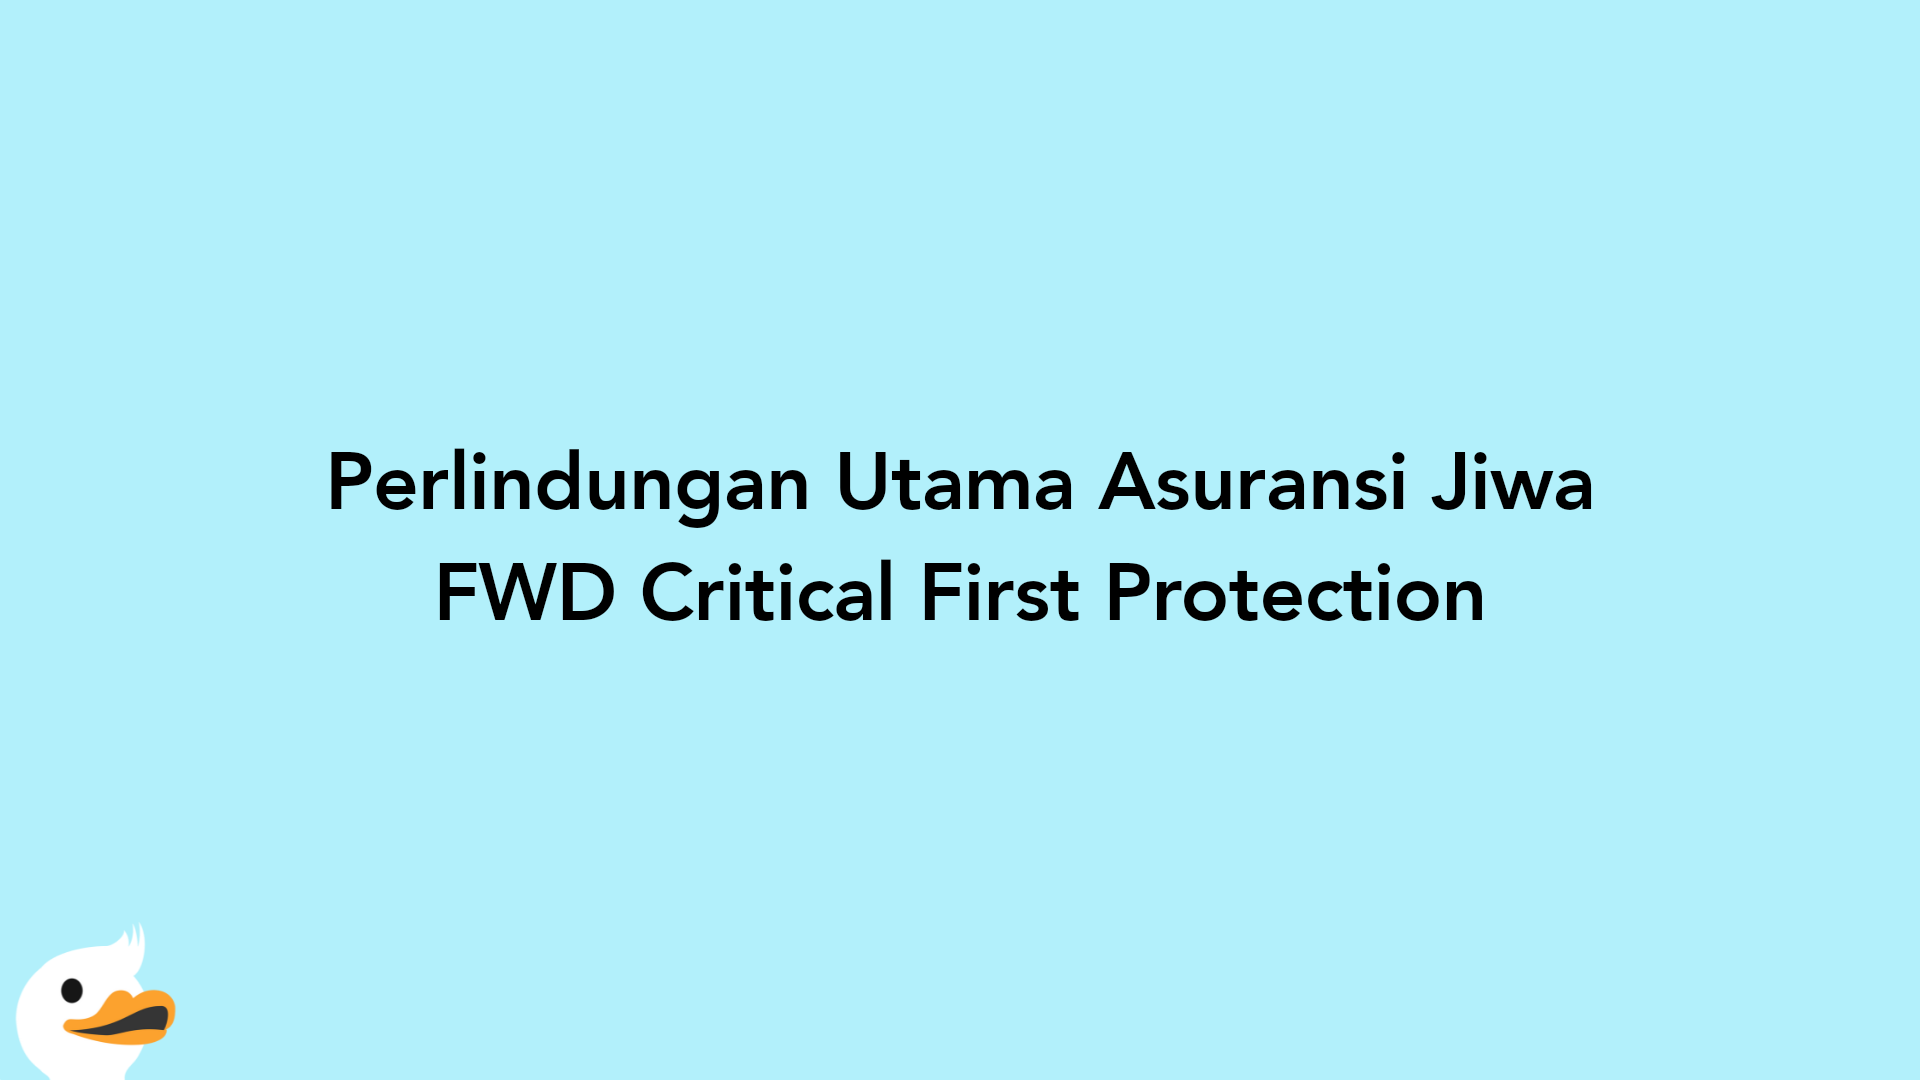 Perlindungan Utama Asuransi Jiwa FWD Critical First Protection